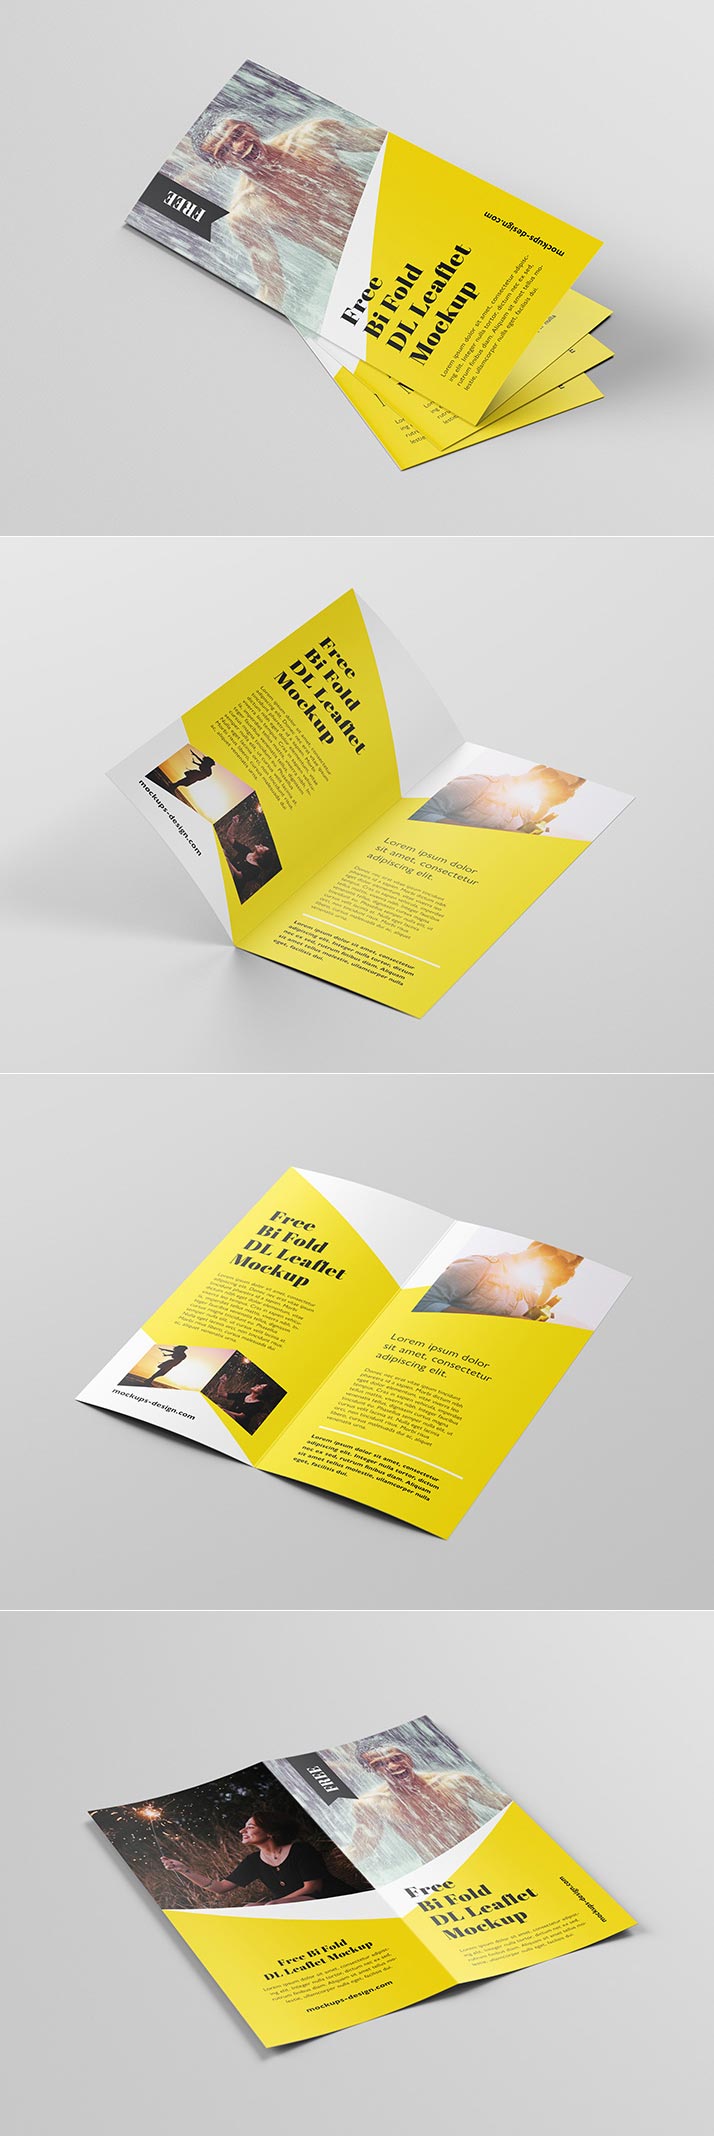 Bi-Fold Brochure Mock-up Free Download